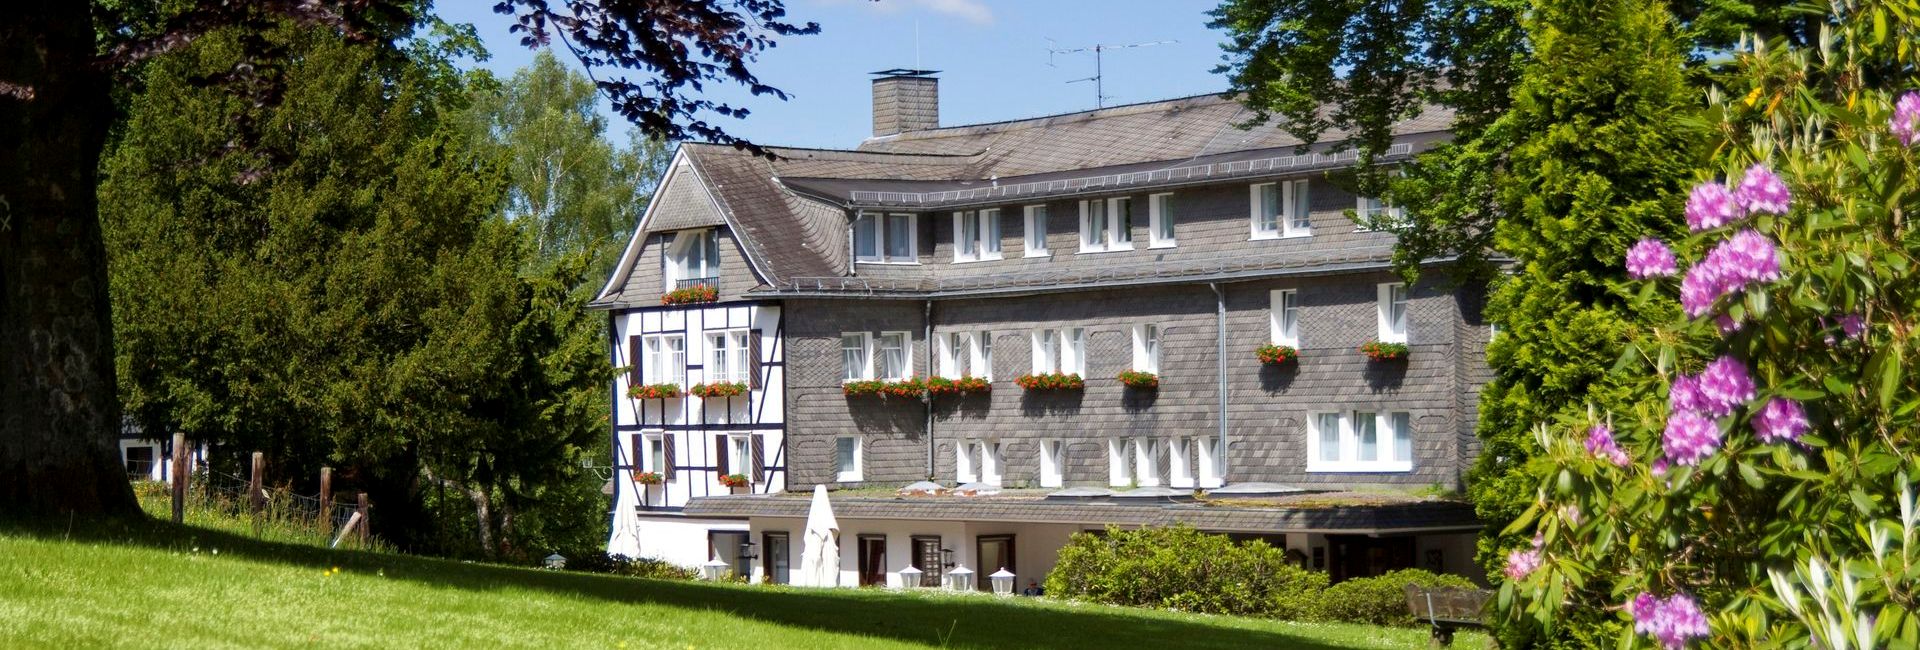 Hotel Jagdhaus Wiese in Sauerland, North Rhine-Westphalia